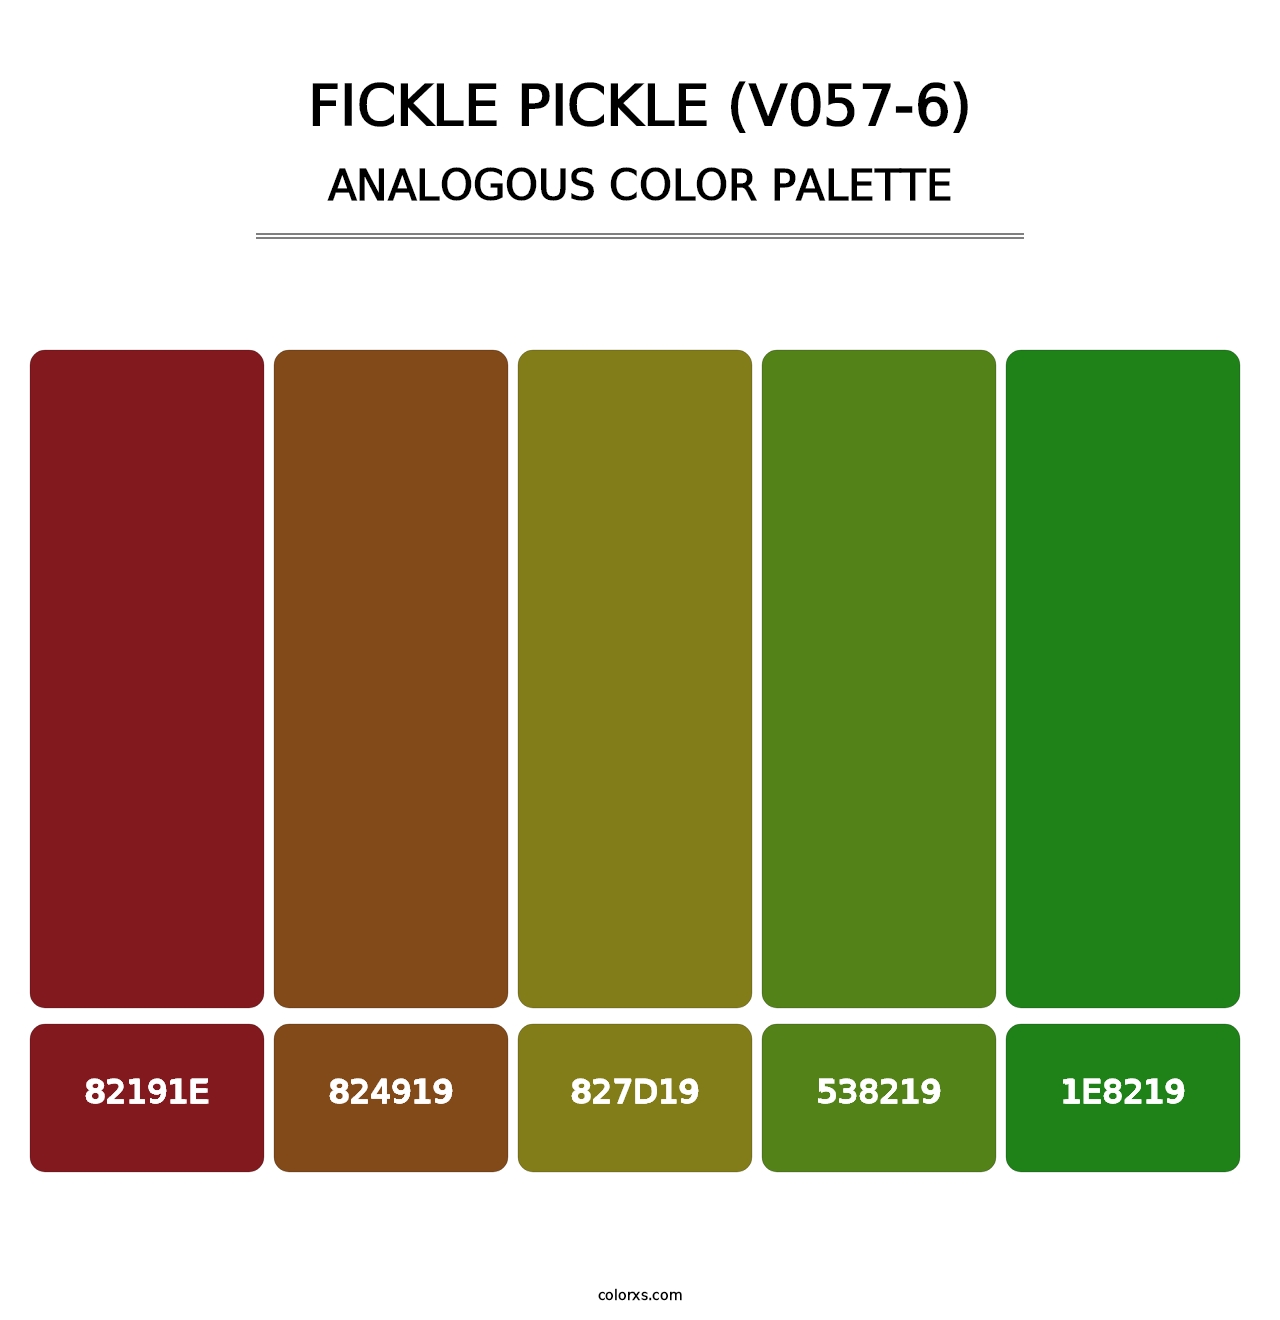 Fickle Pickle (V057-6) - Analogous Color Palette